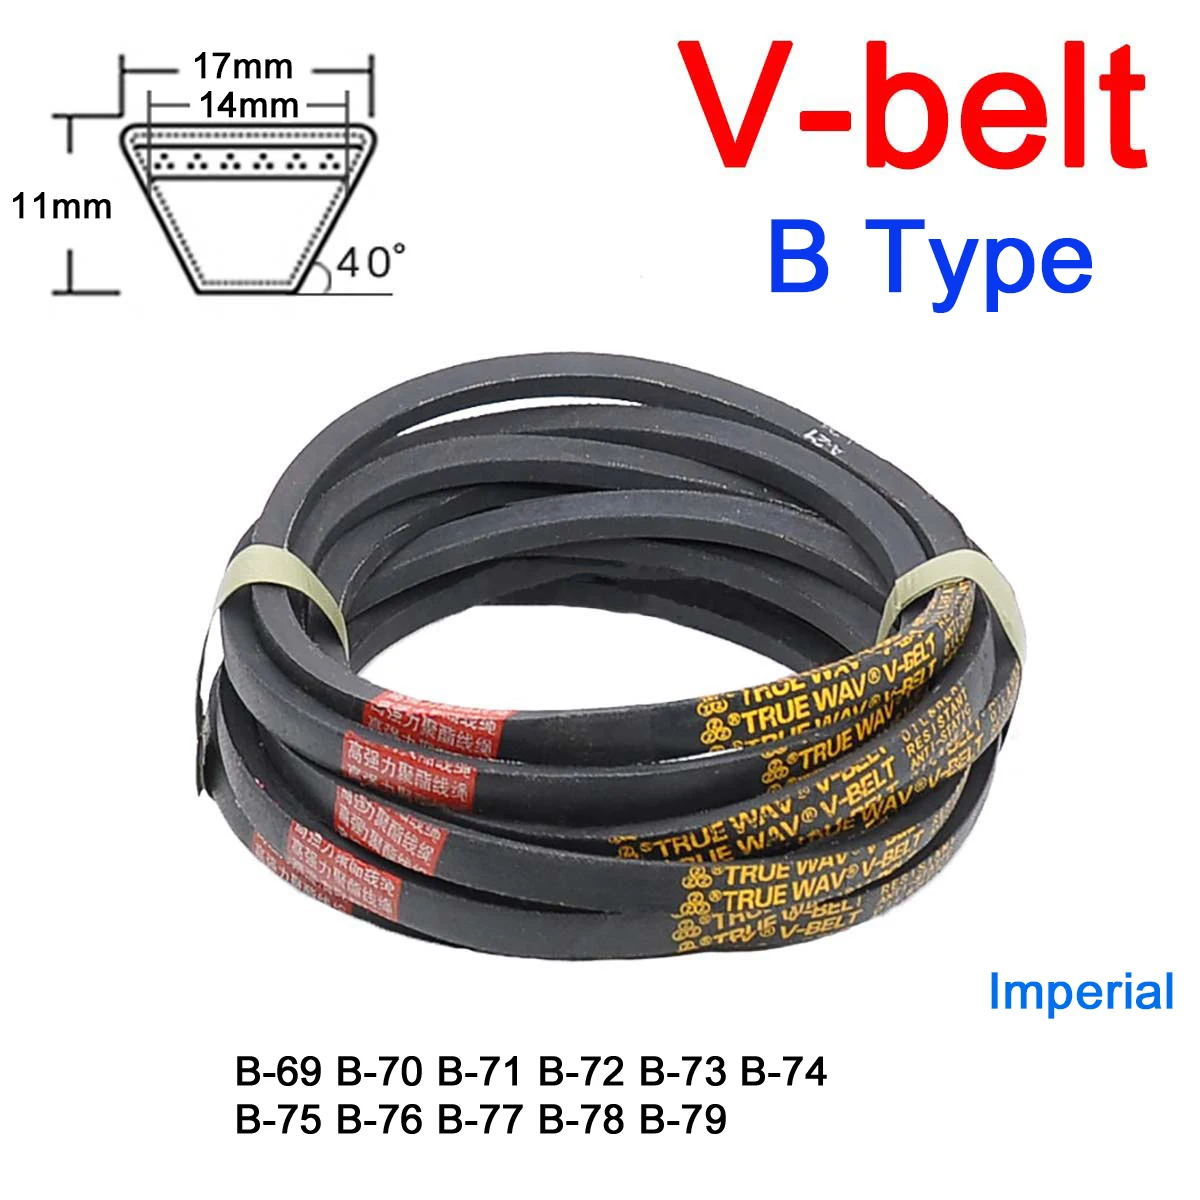 

1Pc B Type V-belt Type B-69 B-70 B-71 B-72 B-73 B-74 B-75 B-76 B-77 B-78 B-79 for Automotive Equipment Agricultural Equipment